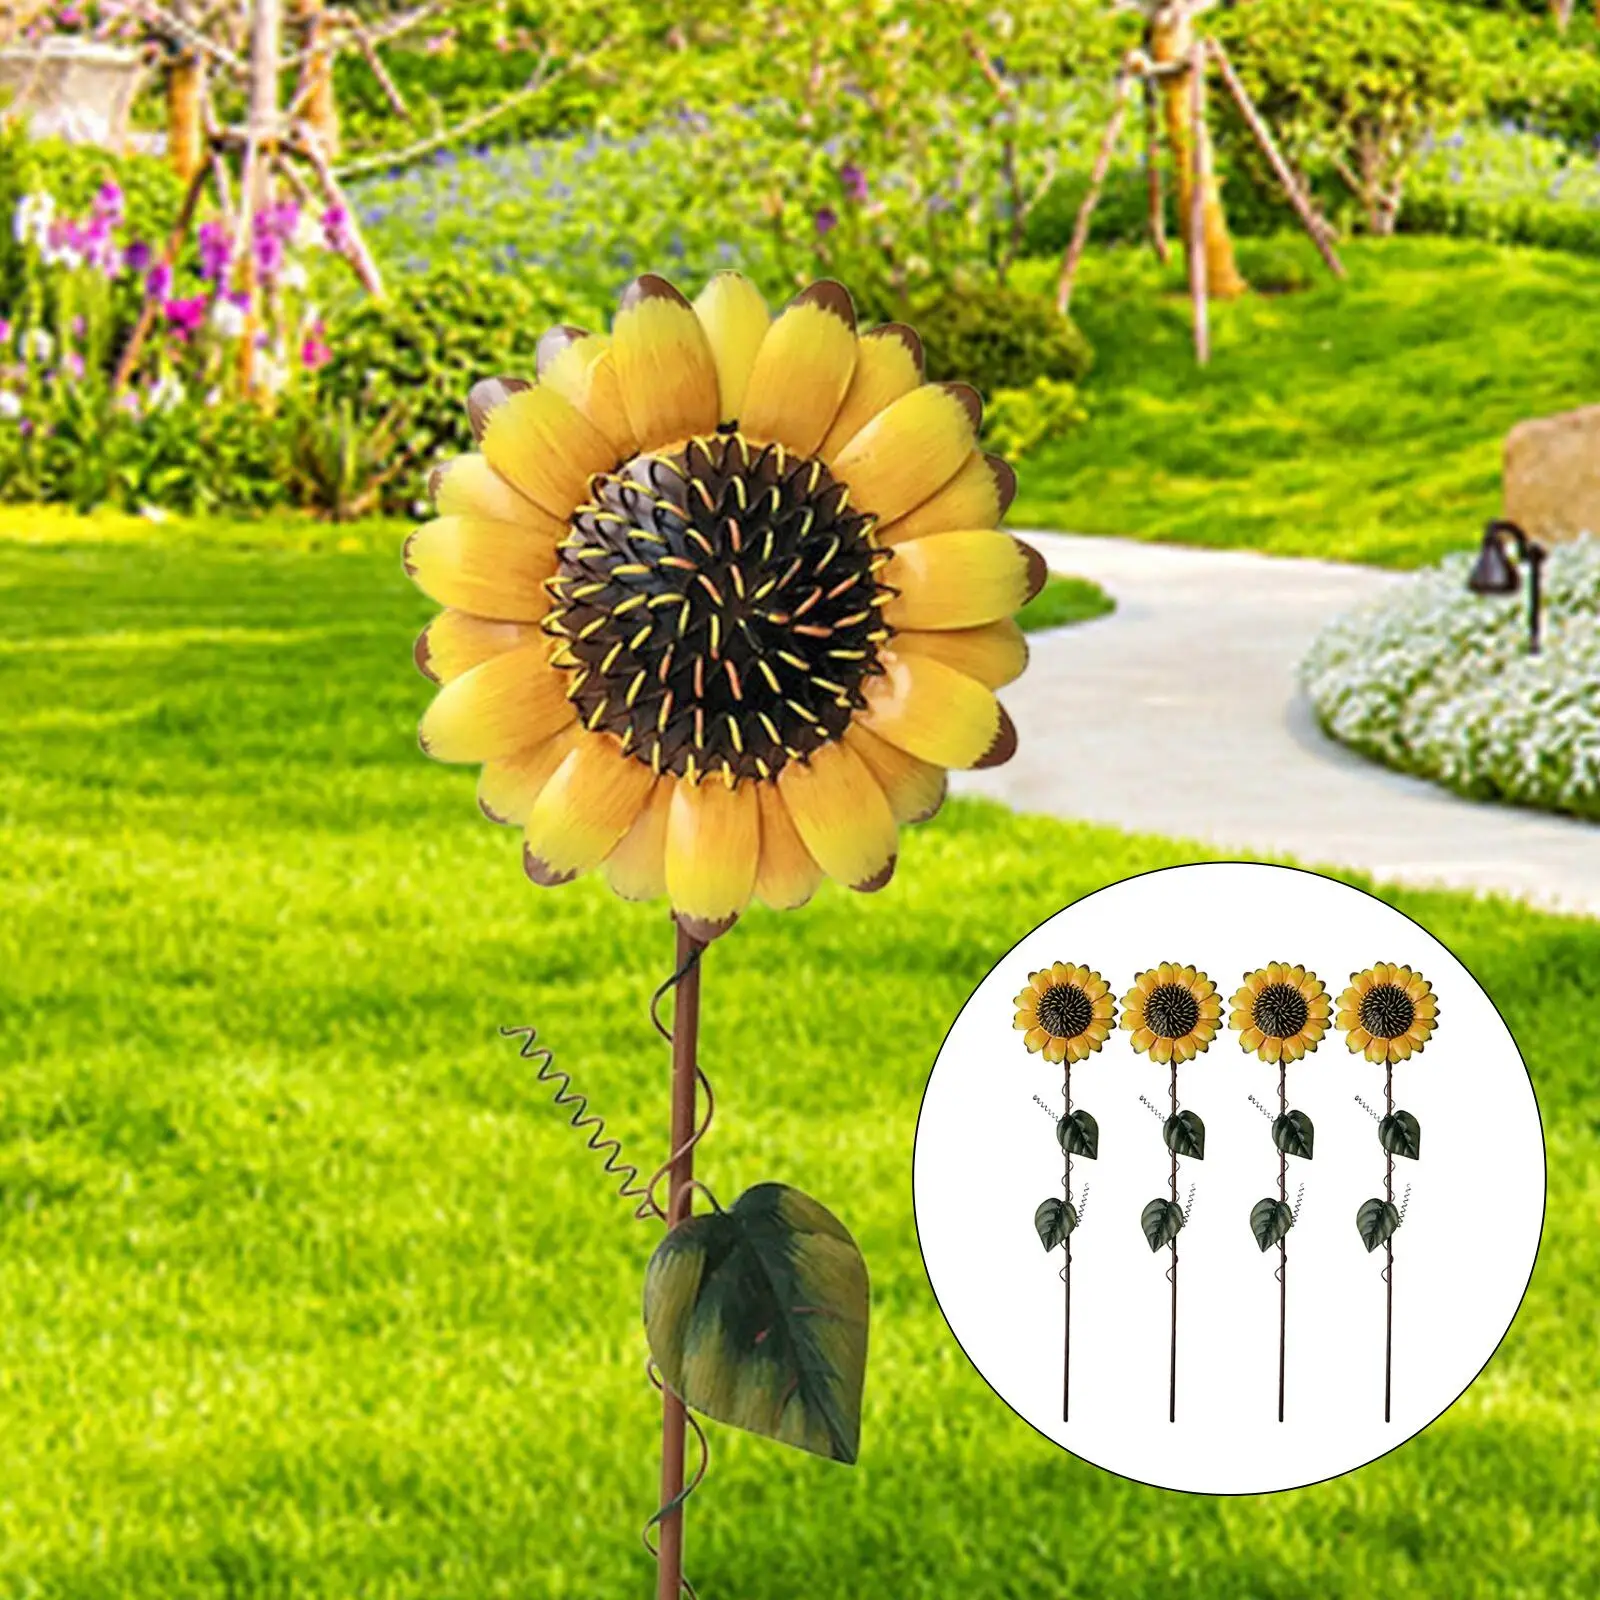 4x Flower Garden Stake Decorative Flower Yard Stake Sunflowers Garden Stake for Outdoor Lawn Patio Backyard